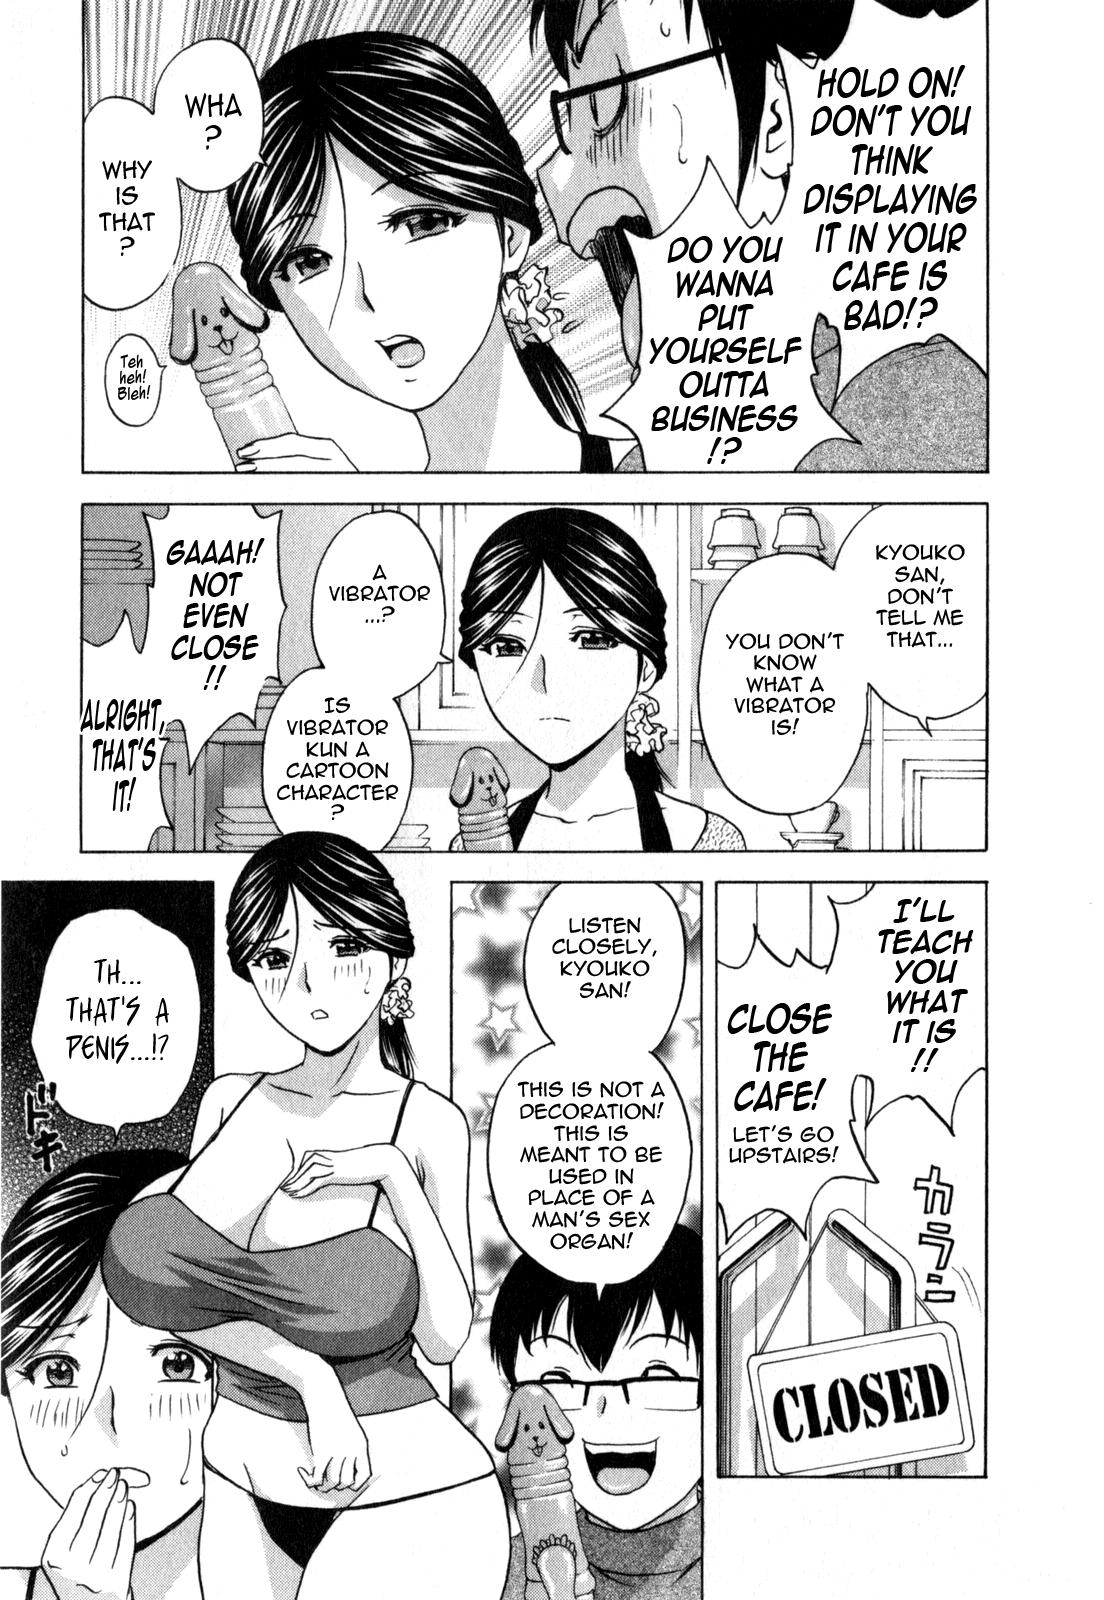 [Hidemaru] Life with Married Women Just Like a Manga 3 - Ch. 1-7 [English] {Tadanohito} 16